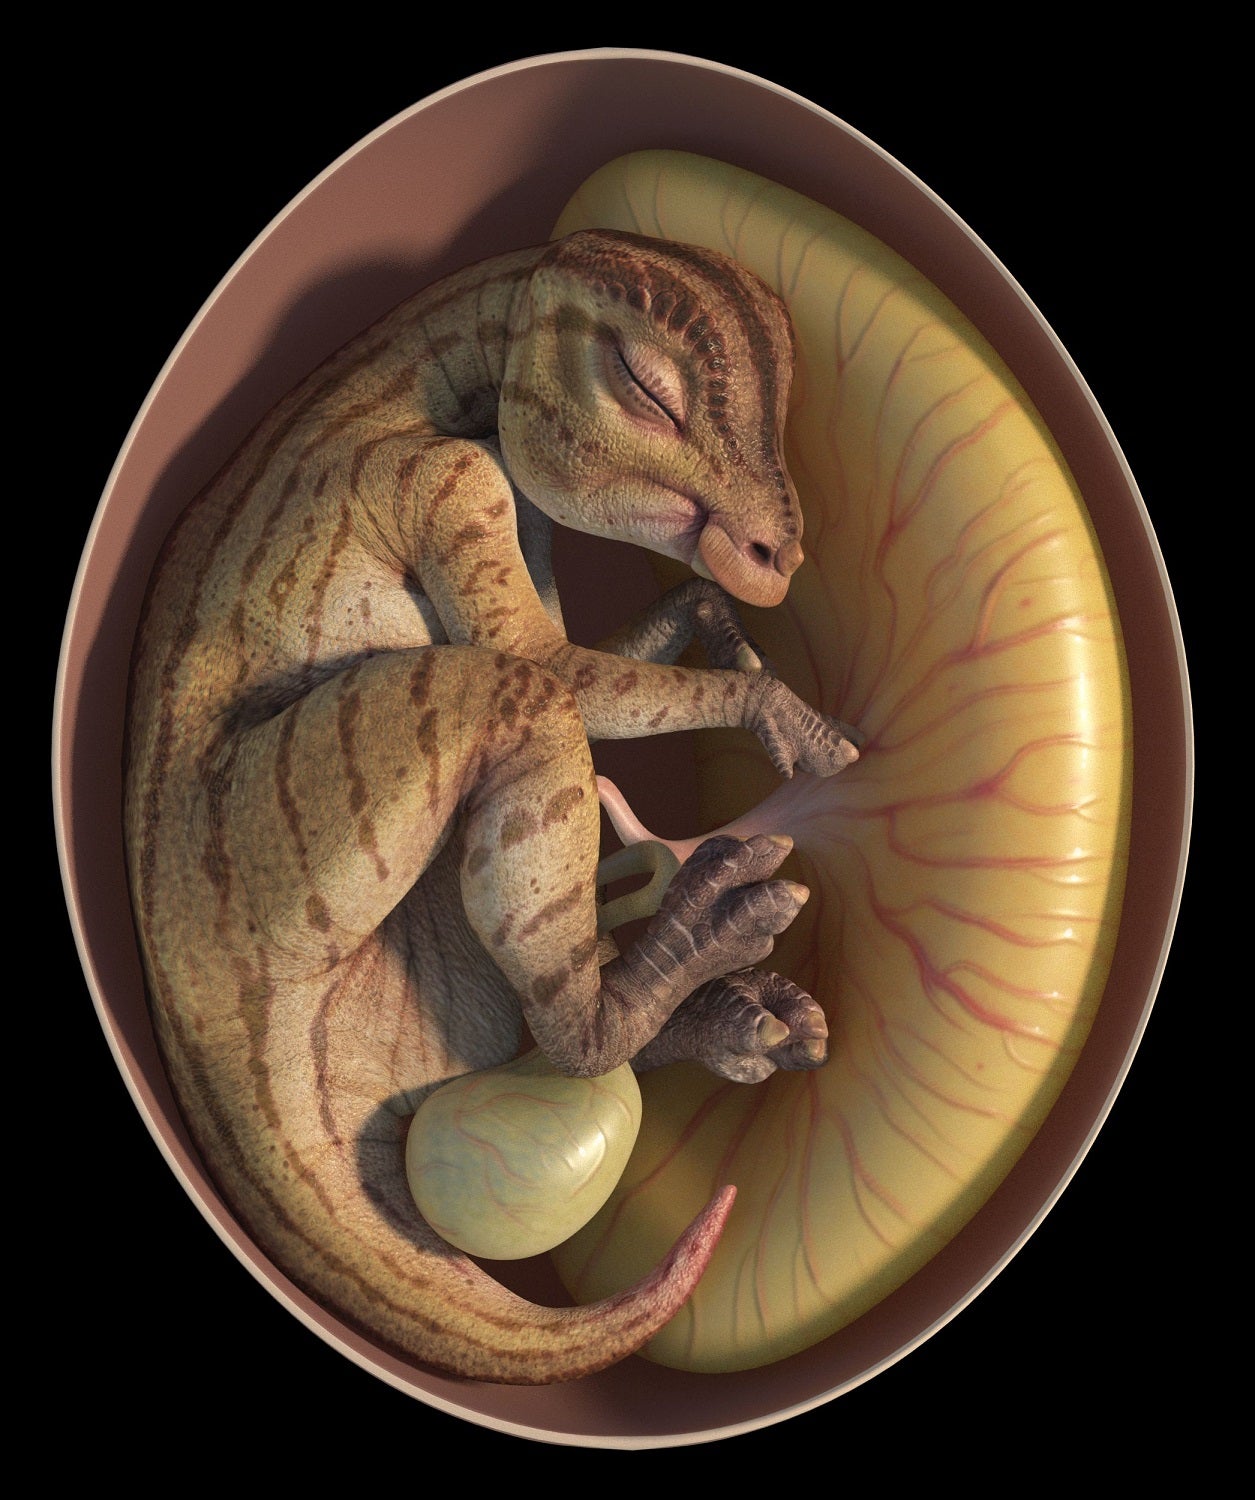 Hadrosaur egg with embryo. Illustration.